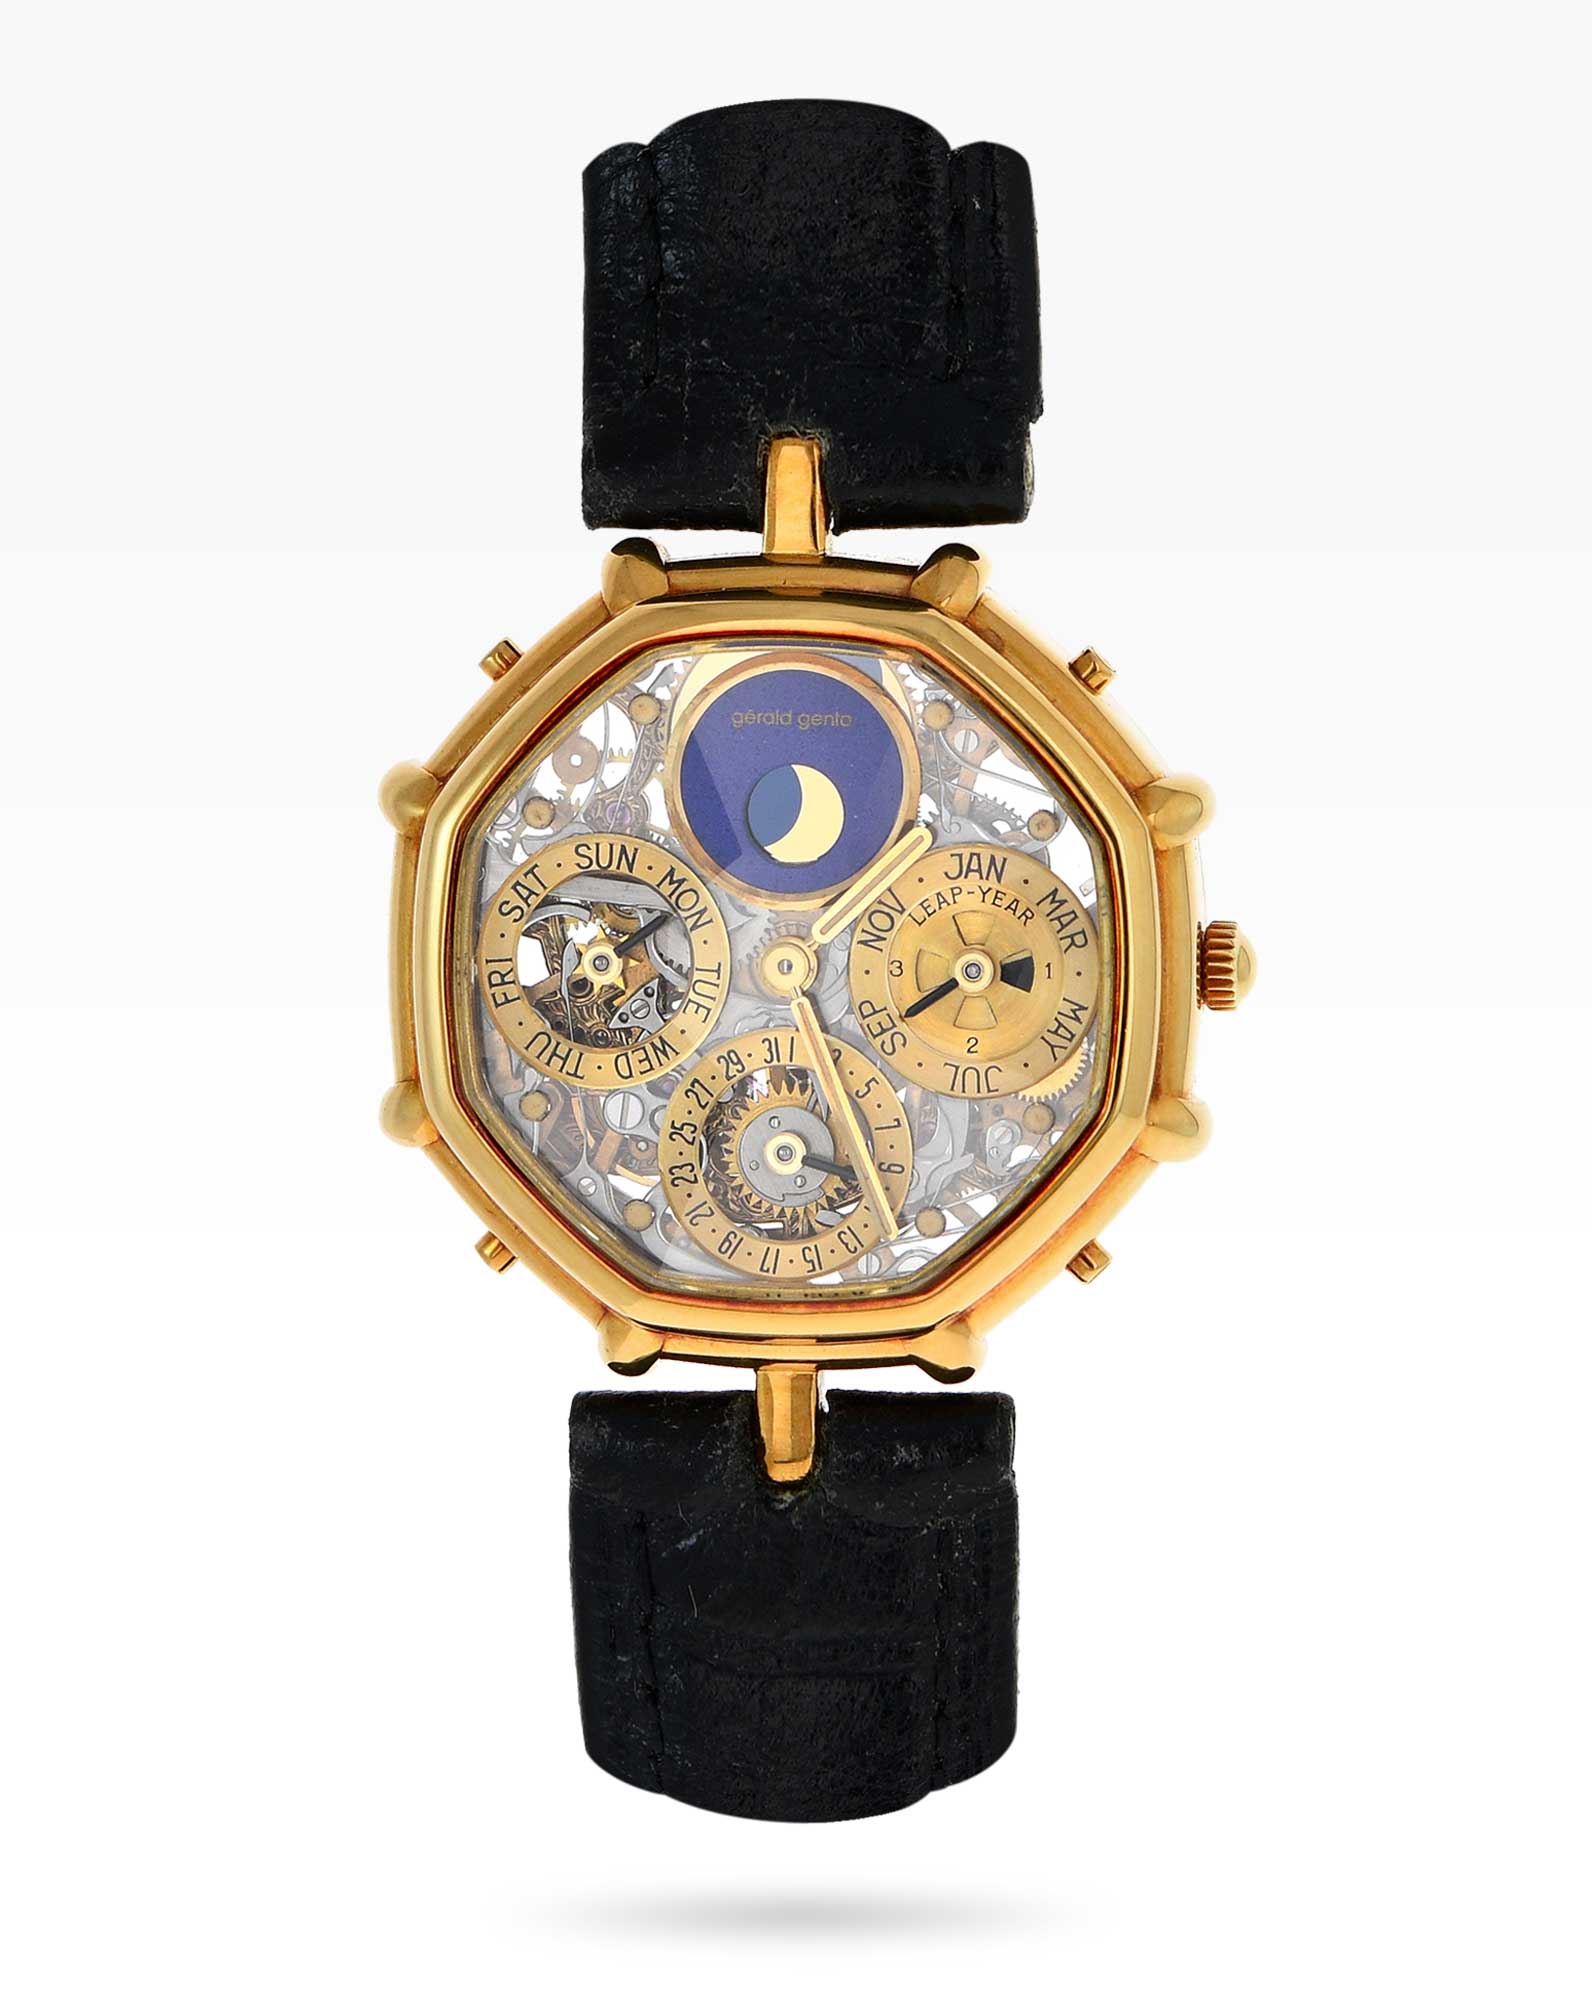 Gerald Genta Octagonal Perpetual Calendar Moonphase Skeleton Watch - 2ToneVintage Watches